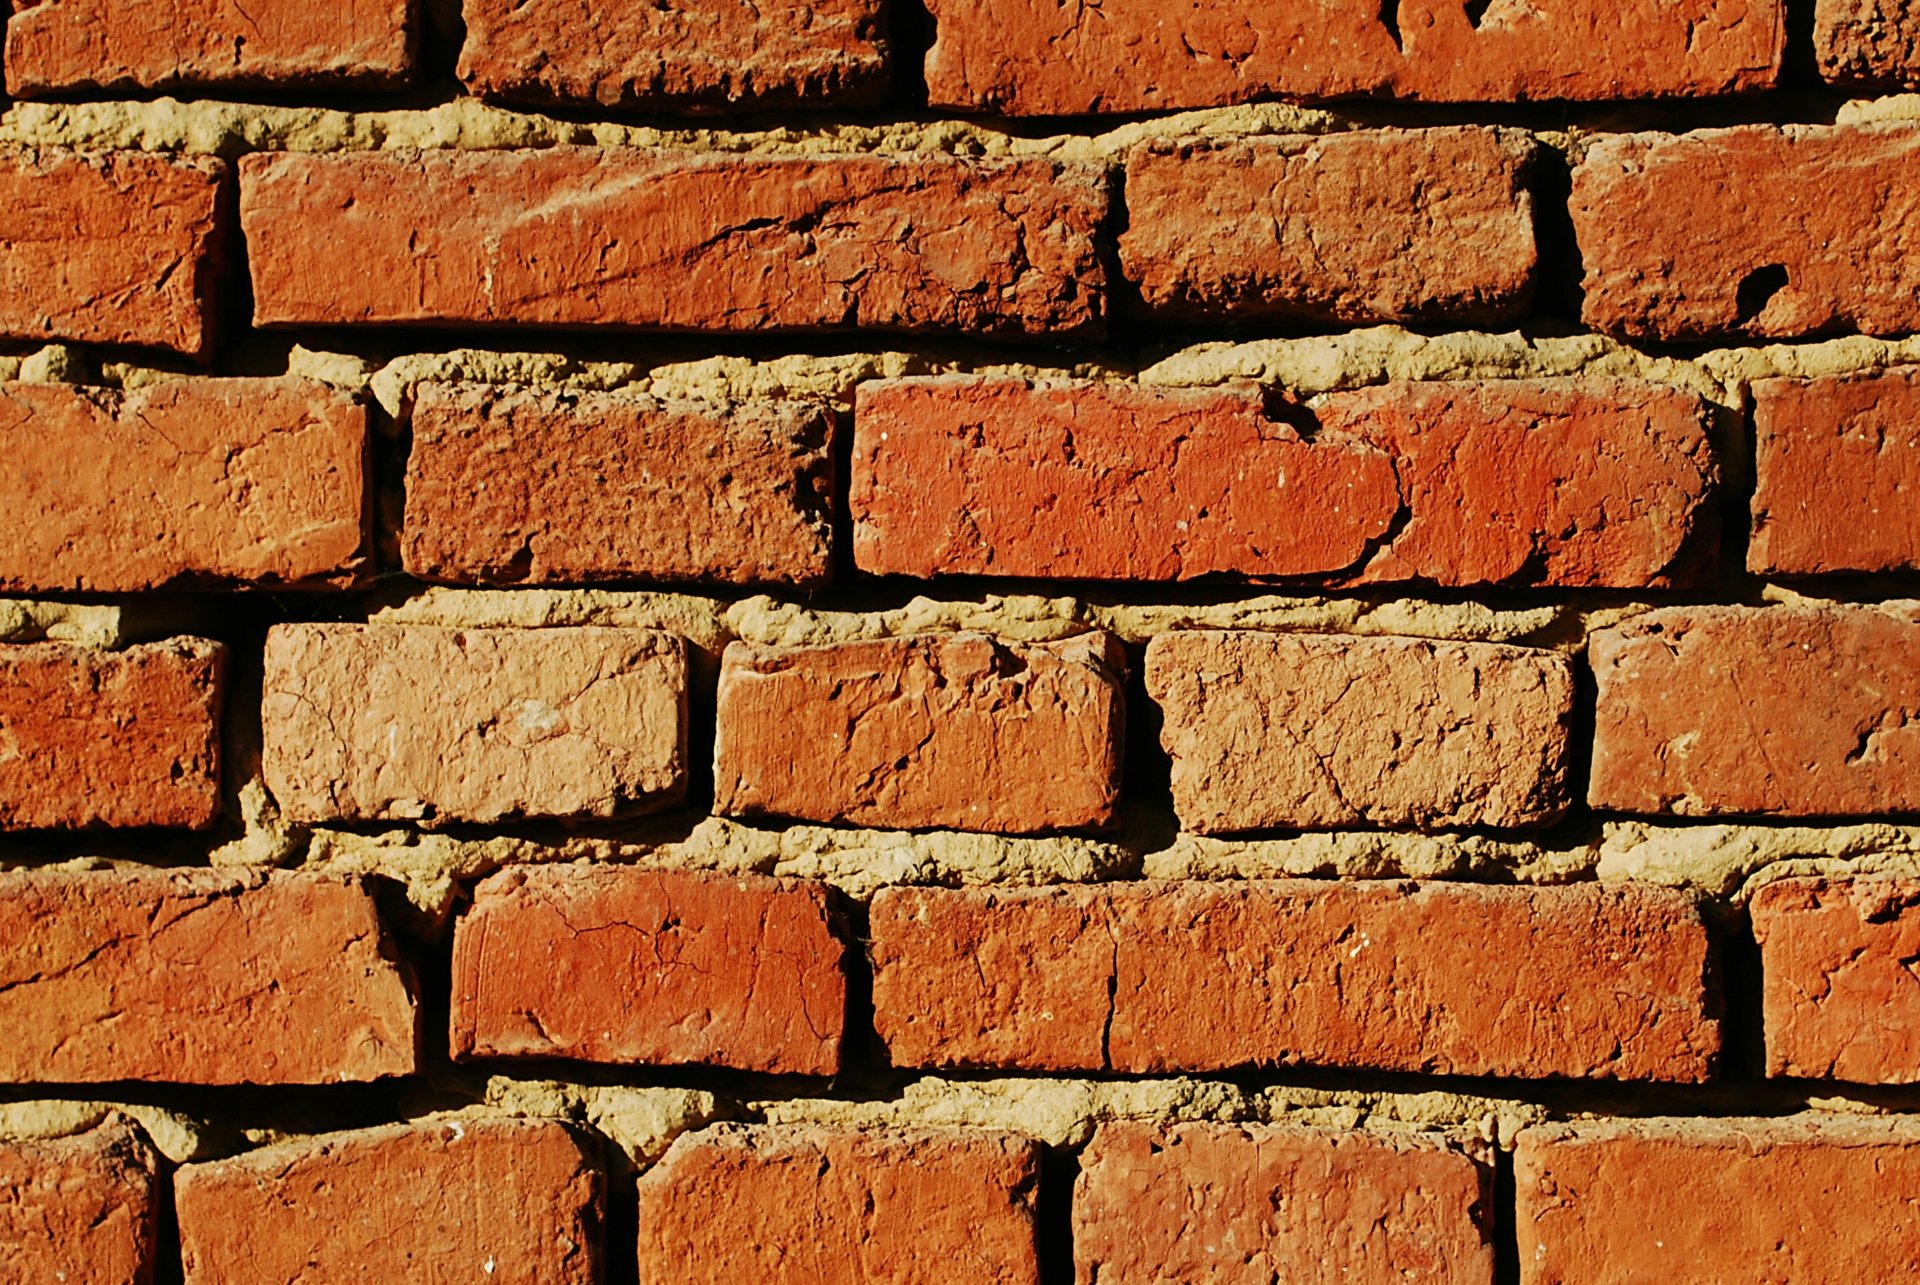 Brick 4k Ultra HD Wallpaper Background Image 3872x2592 